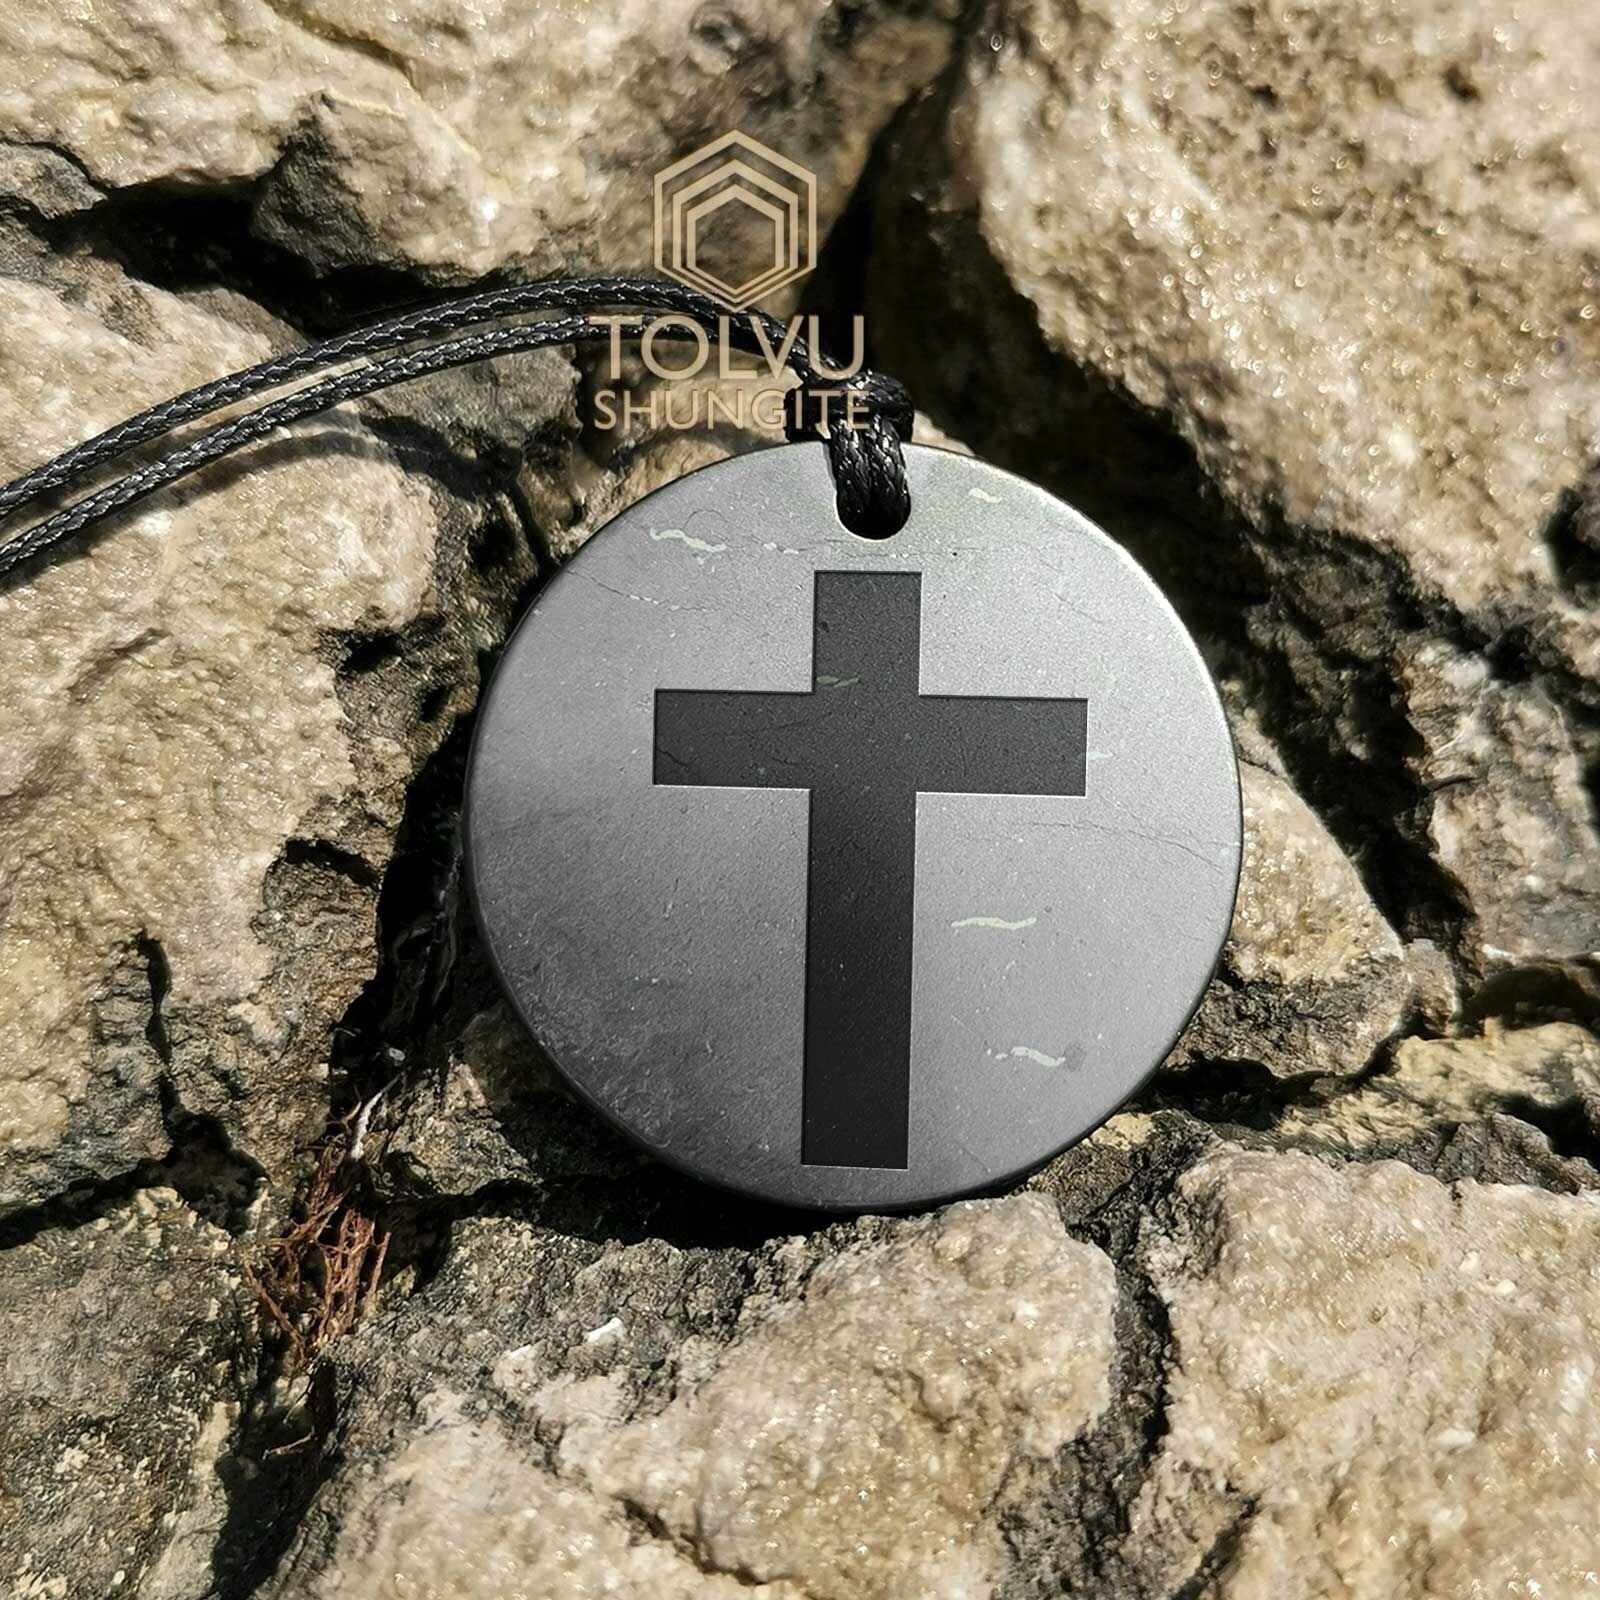 Shungite stone pendant Cross authentic shungite emf protection, Tolvu